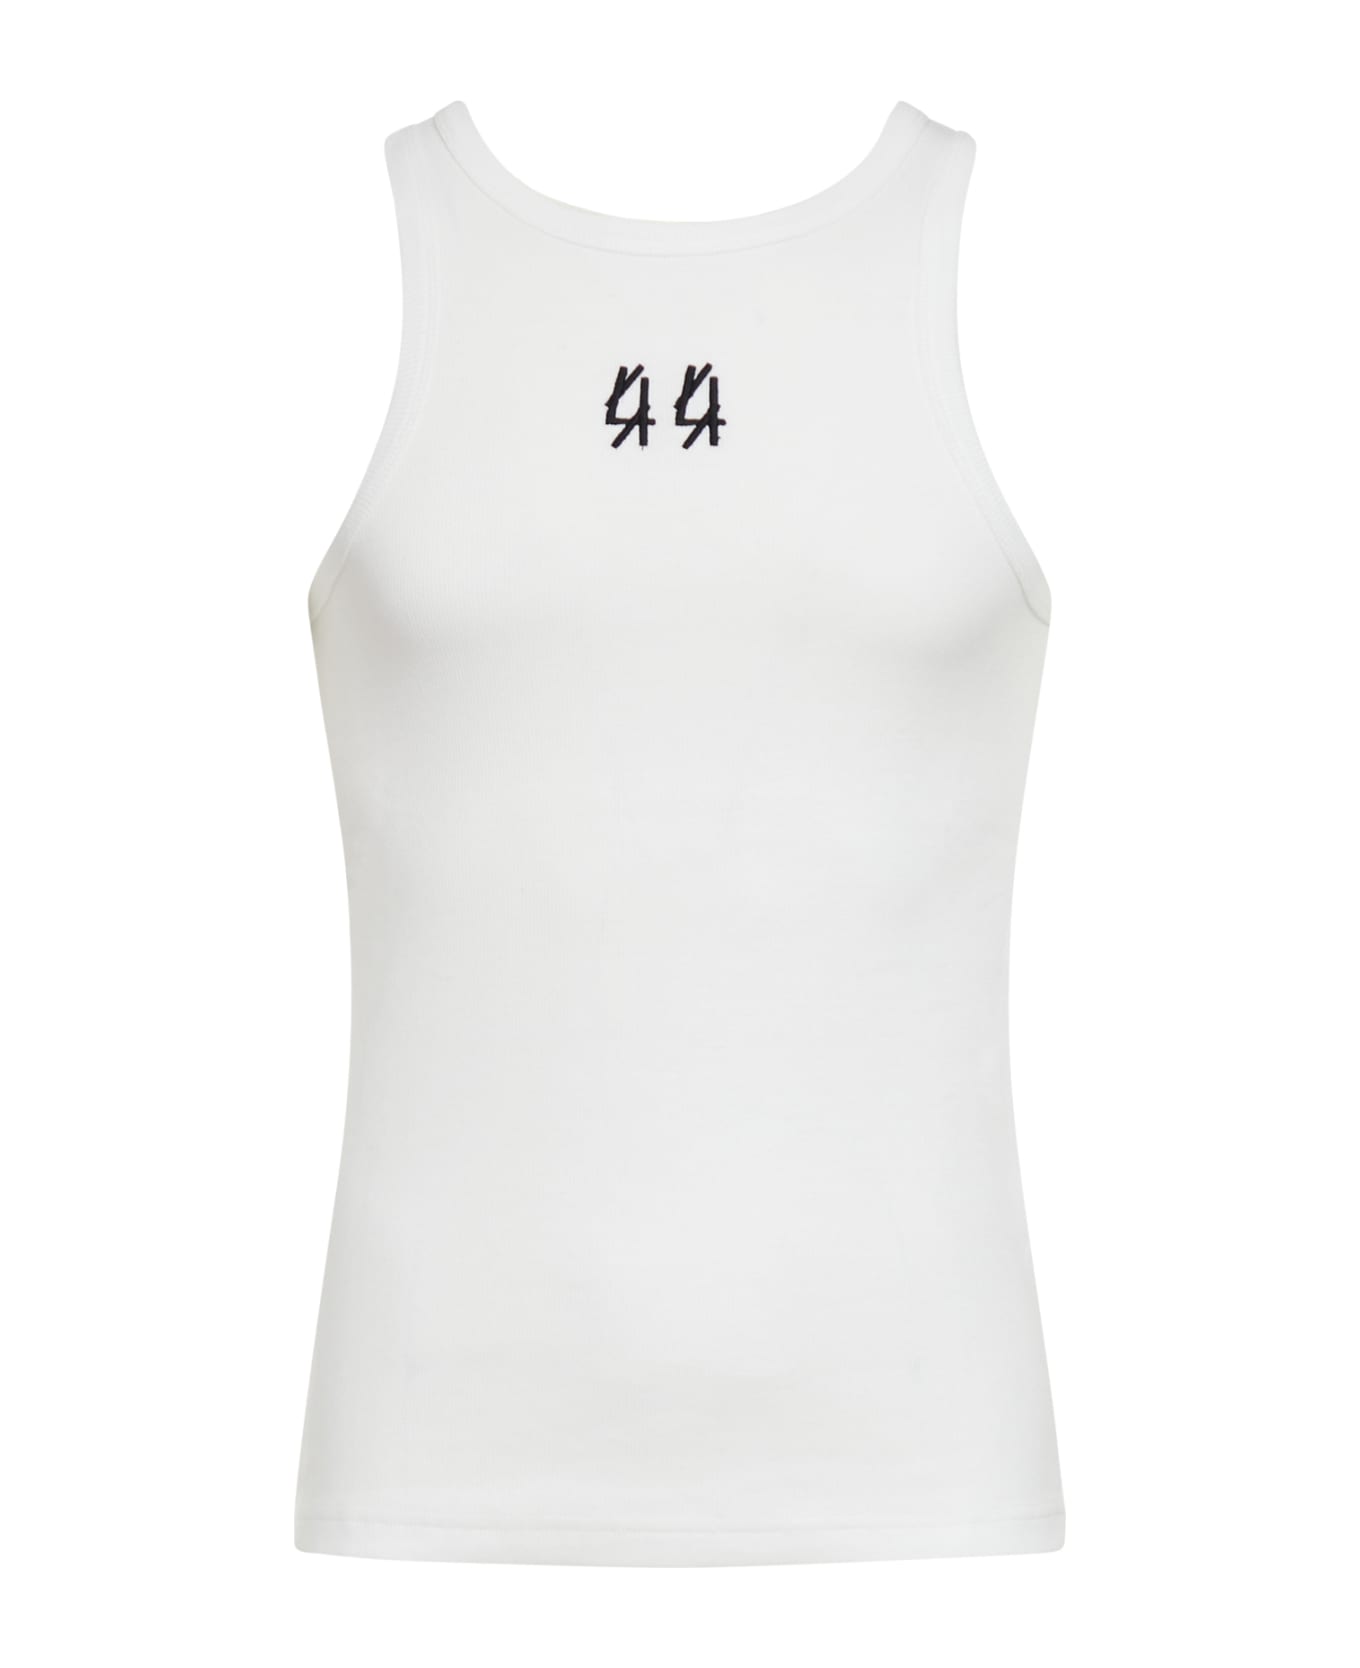 44 Label Group Spine Tank Top - White Black Spine Print